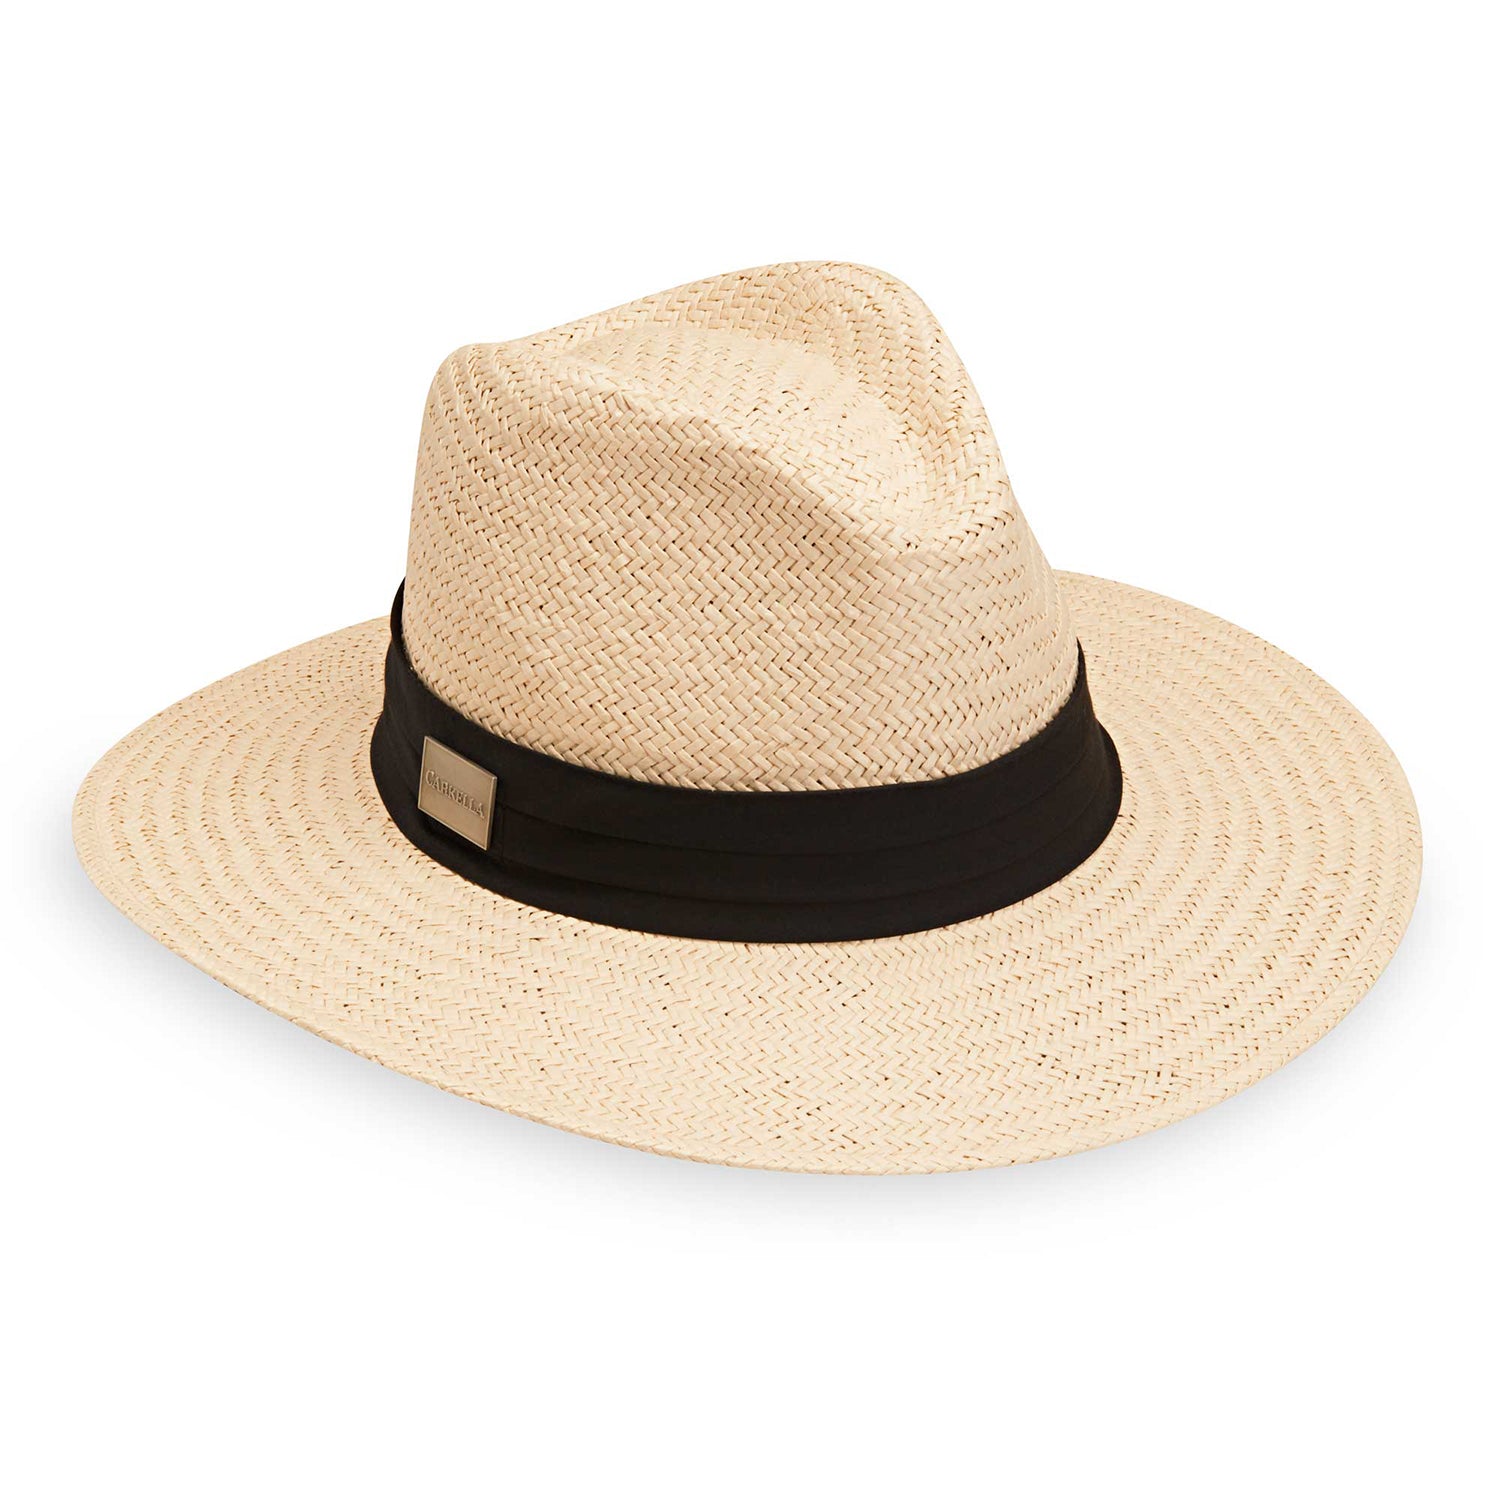 Wallaroo Hat Co. M's Palm Beach Hat L/XL